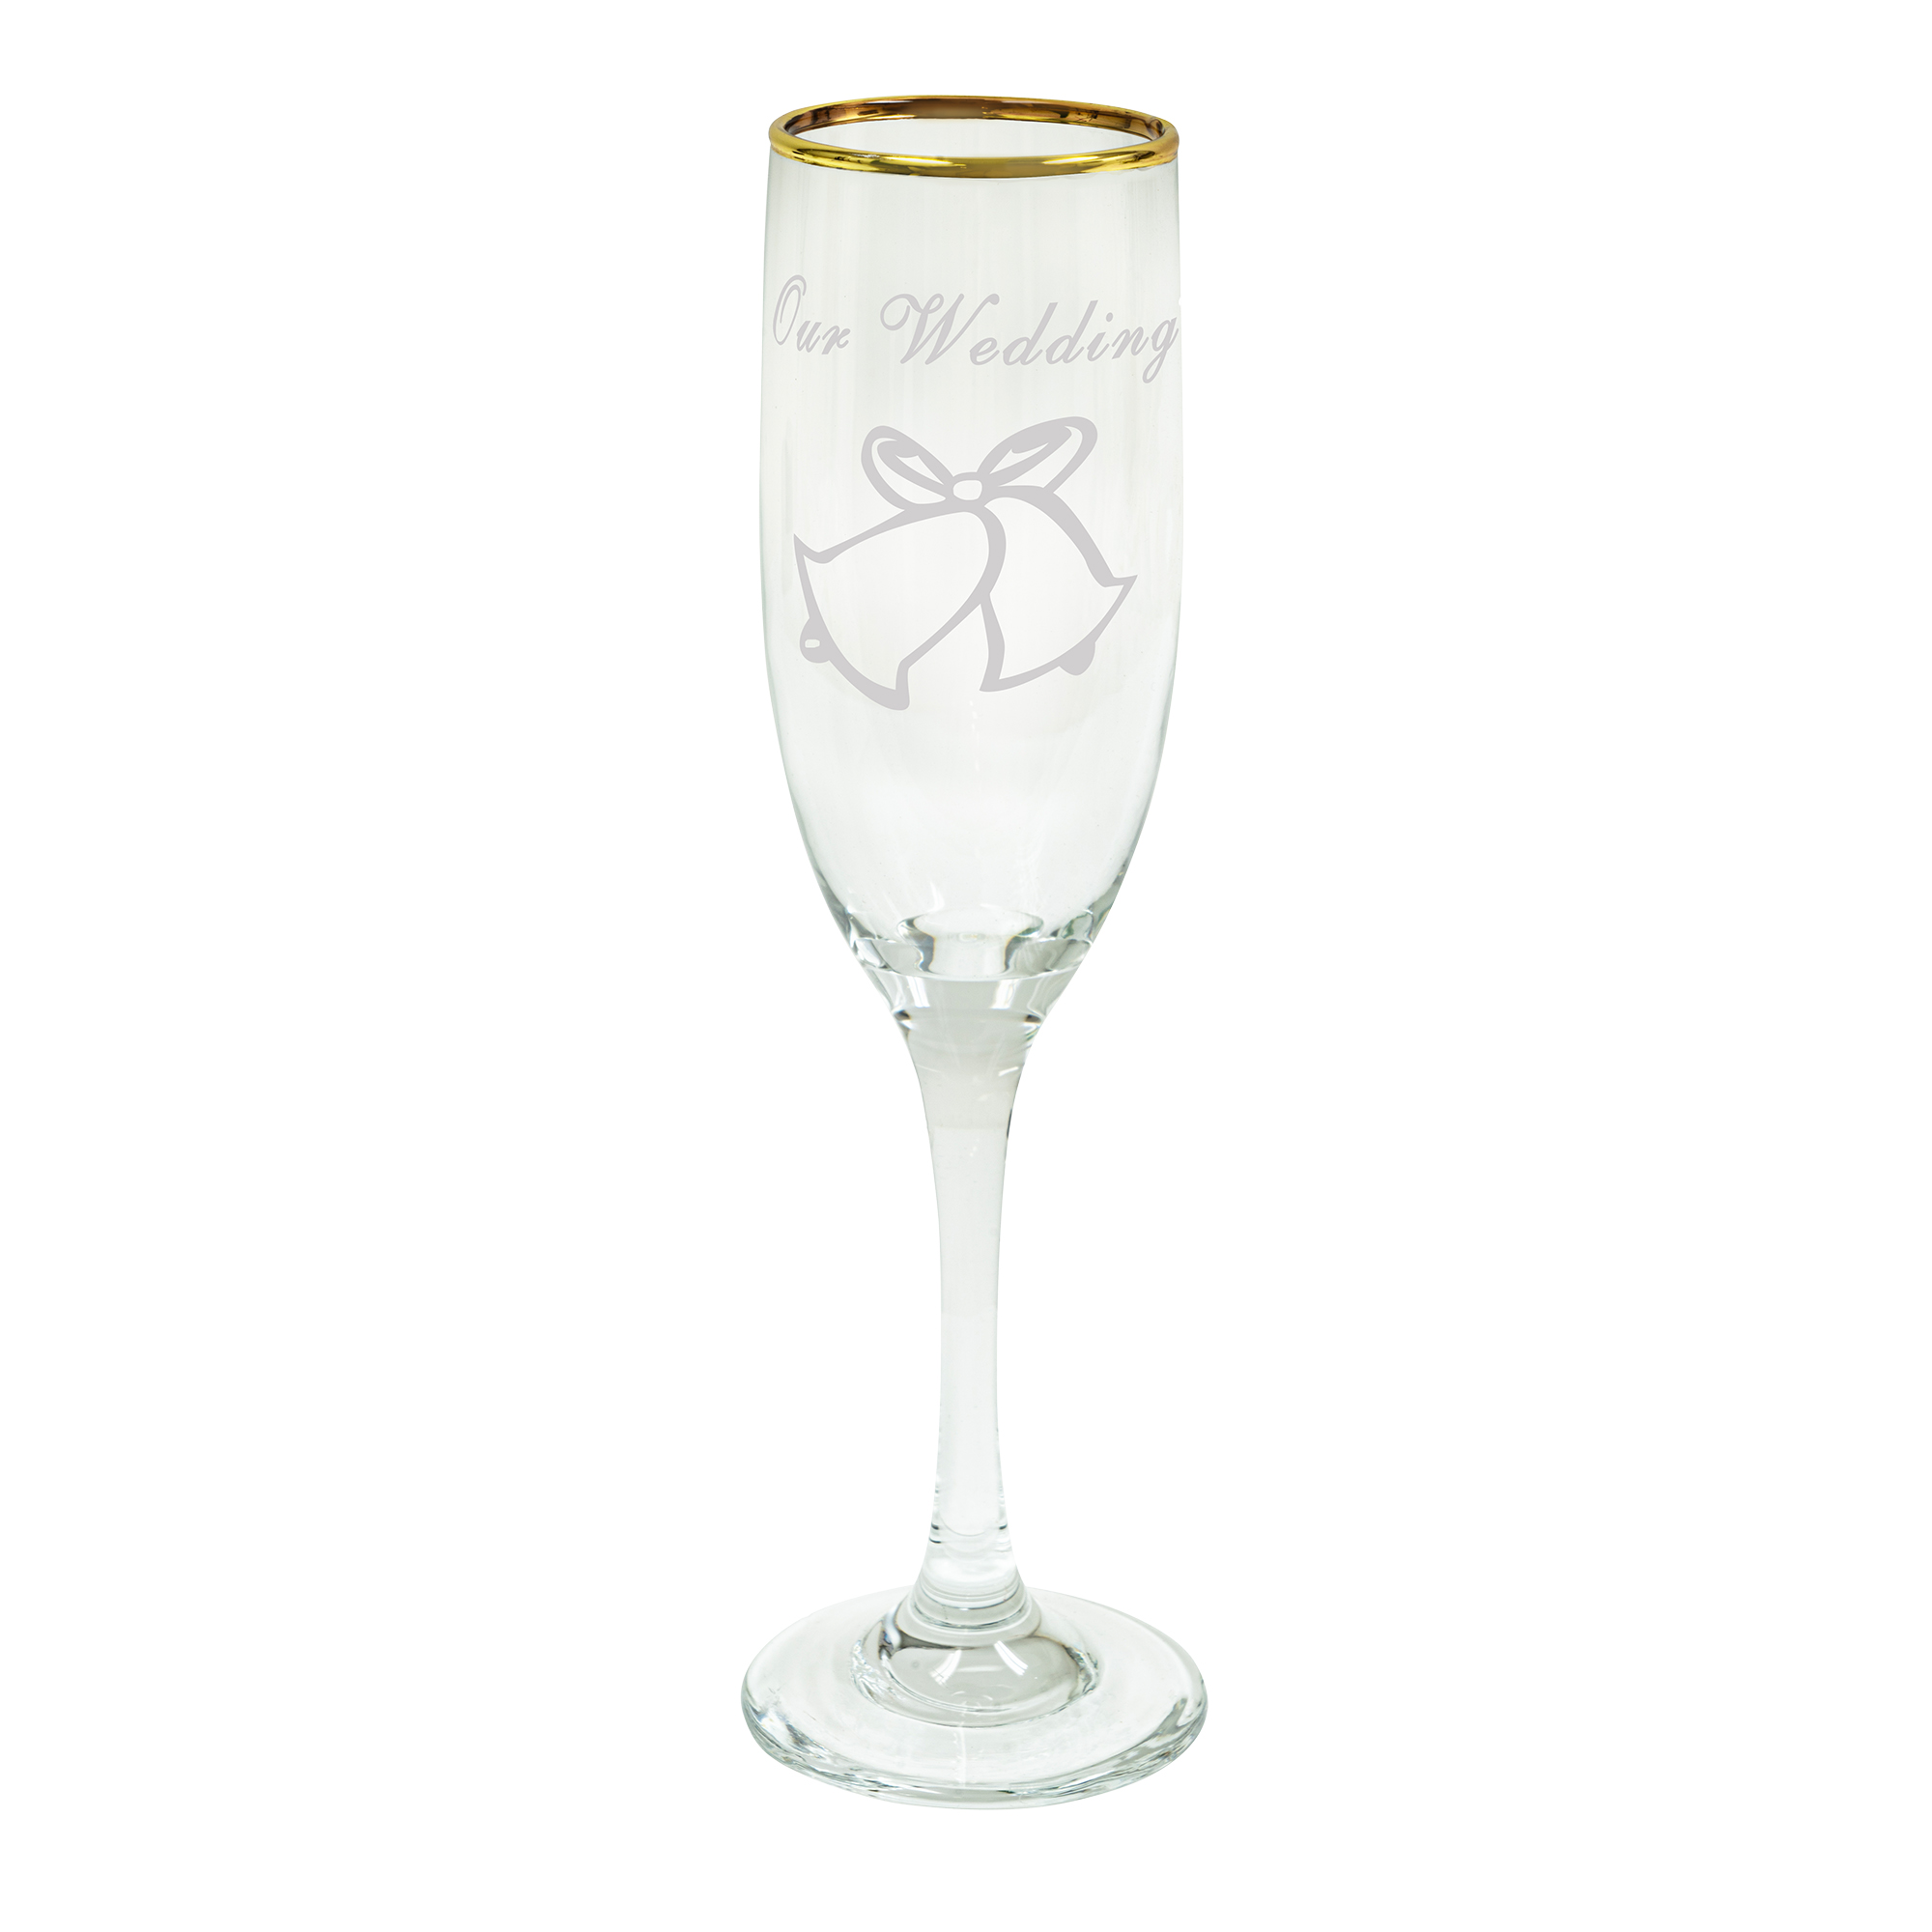 Glass Champagne Flutes Gold Rim- "Our Wedding" Set of 6pcs